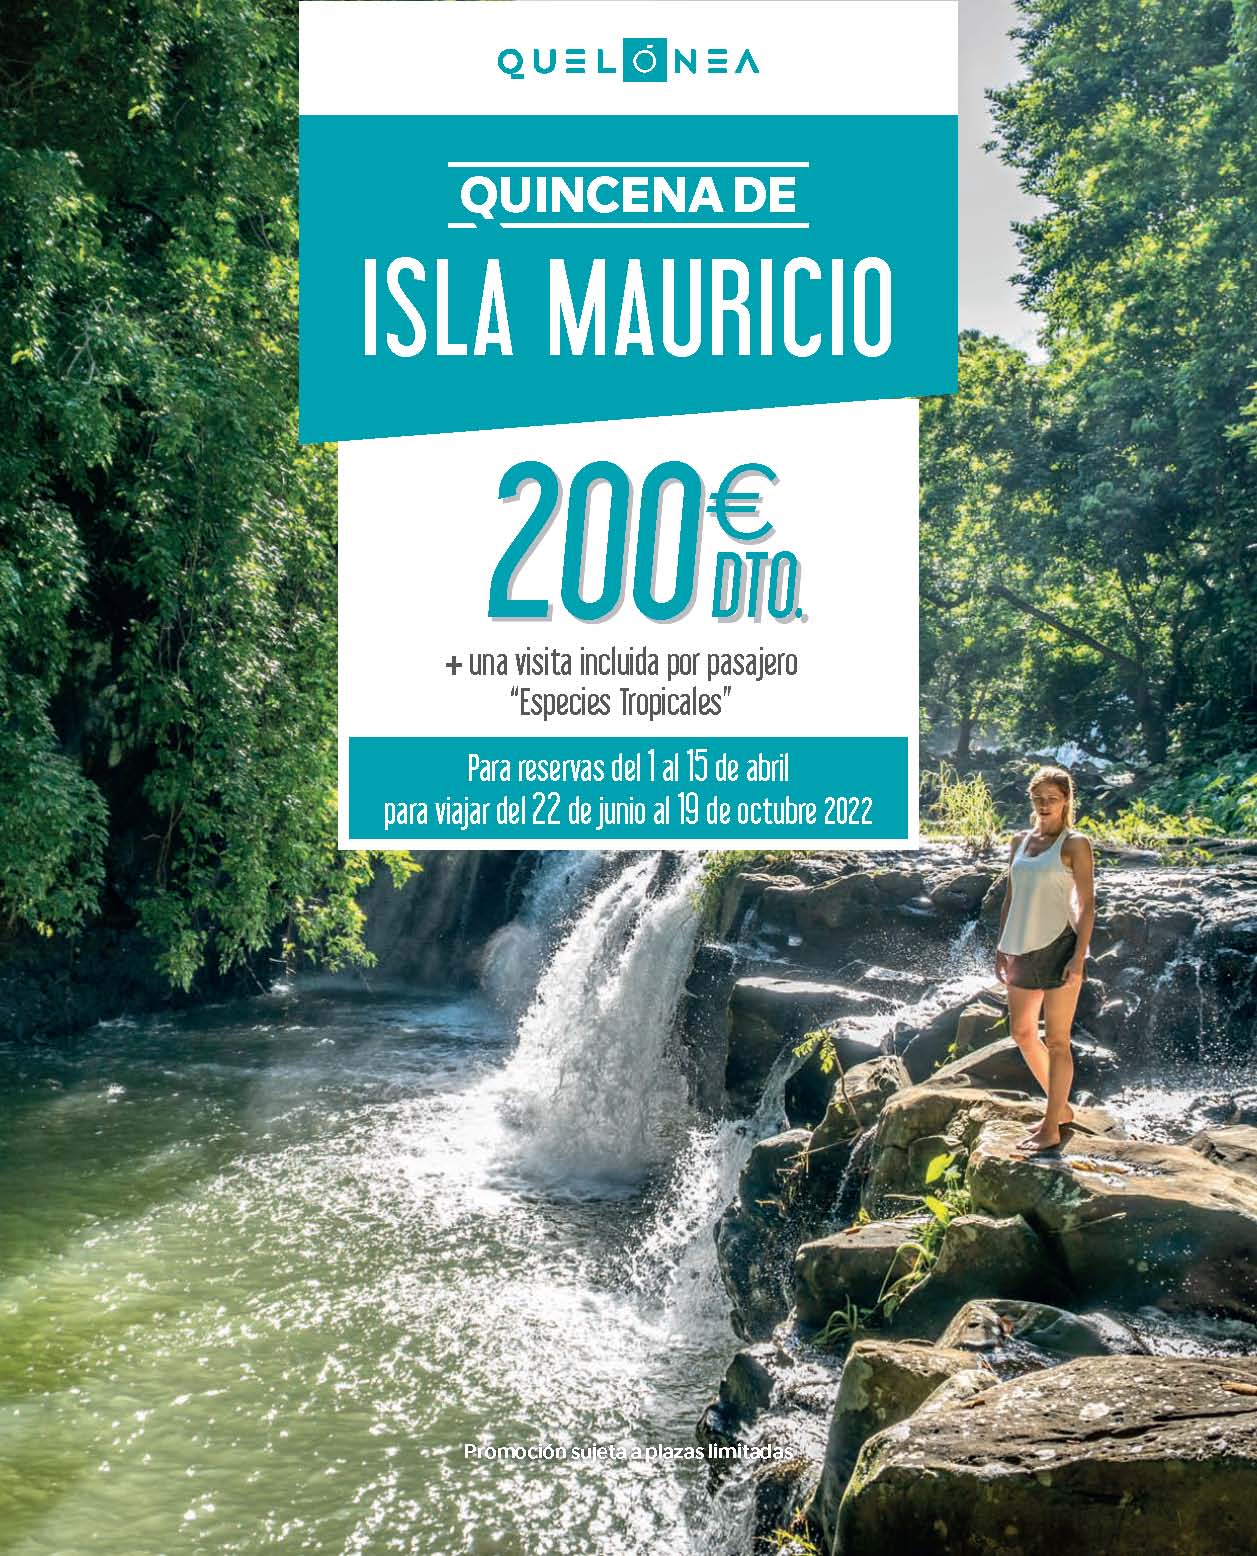 Oferta Quelonea Verano 2022 en Mauricio 200 euros de descuento mas excursion salidas vuelo directo desde Madrid